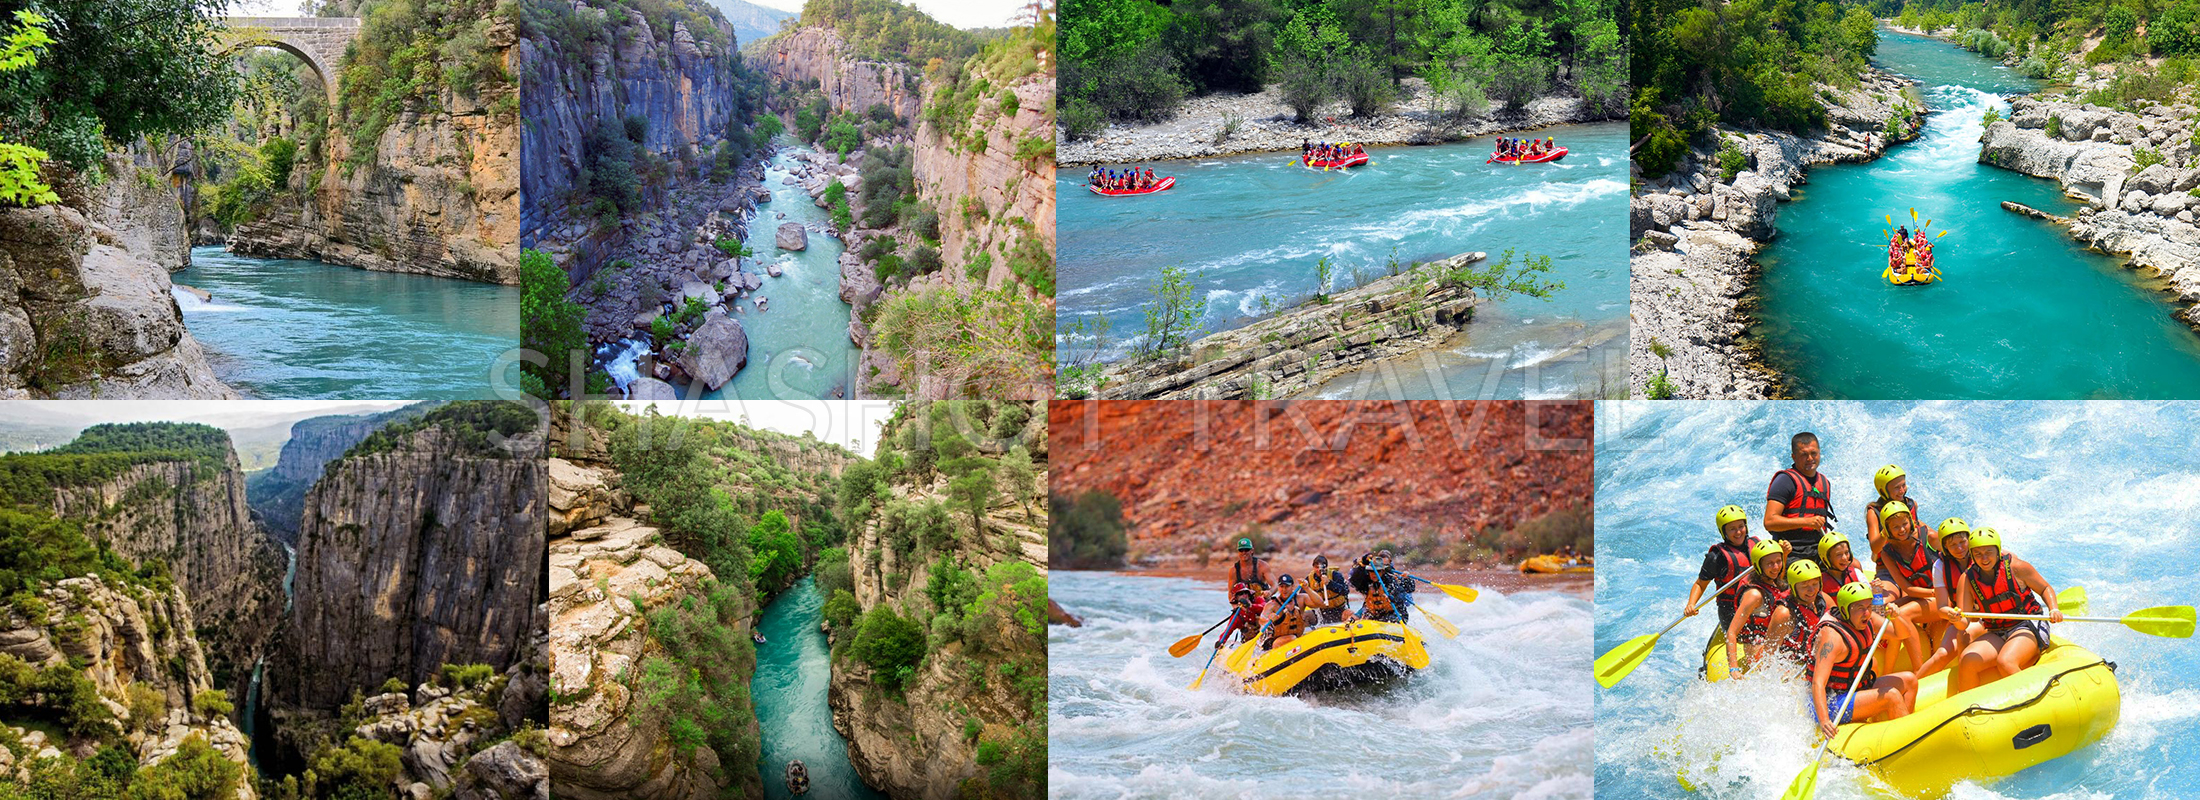 turkey-antalya-koprulu-canyon-rafting-daily-shashot-travel